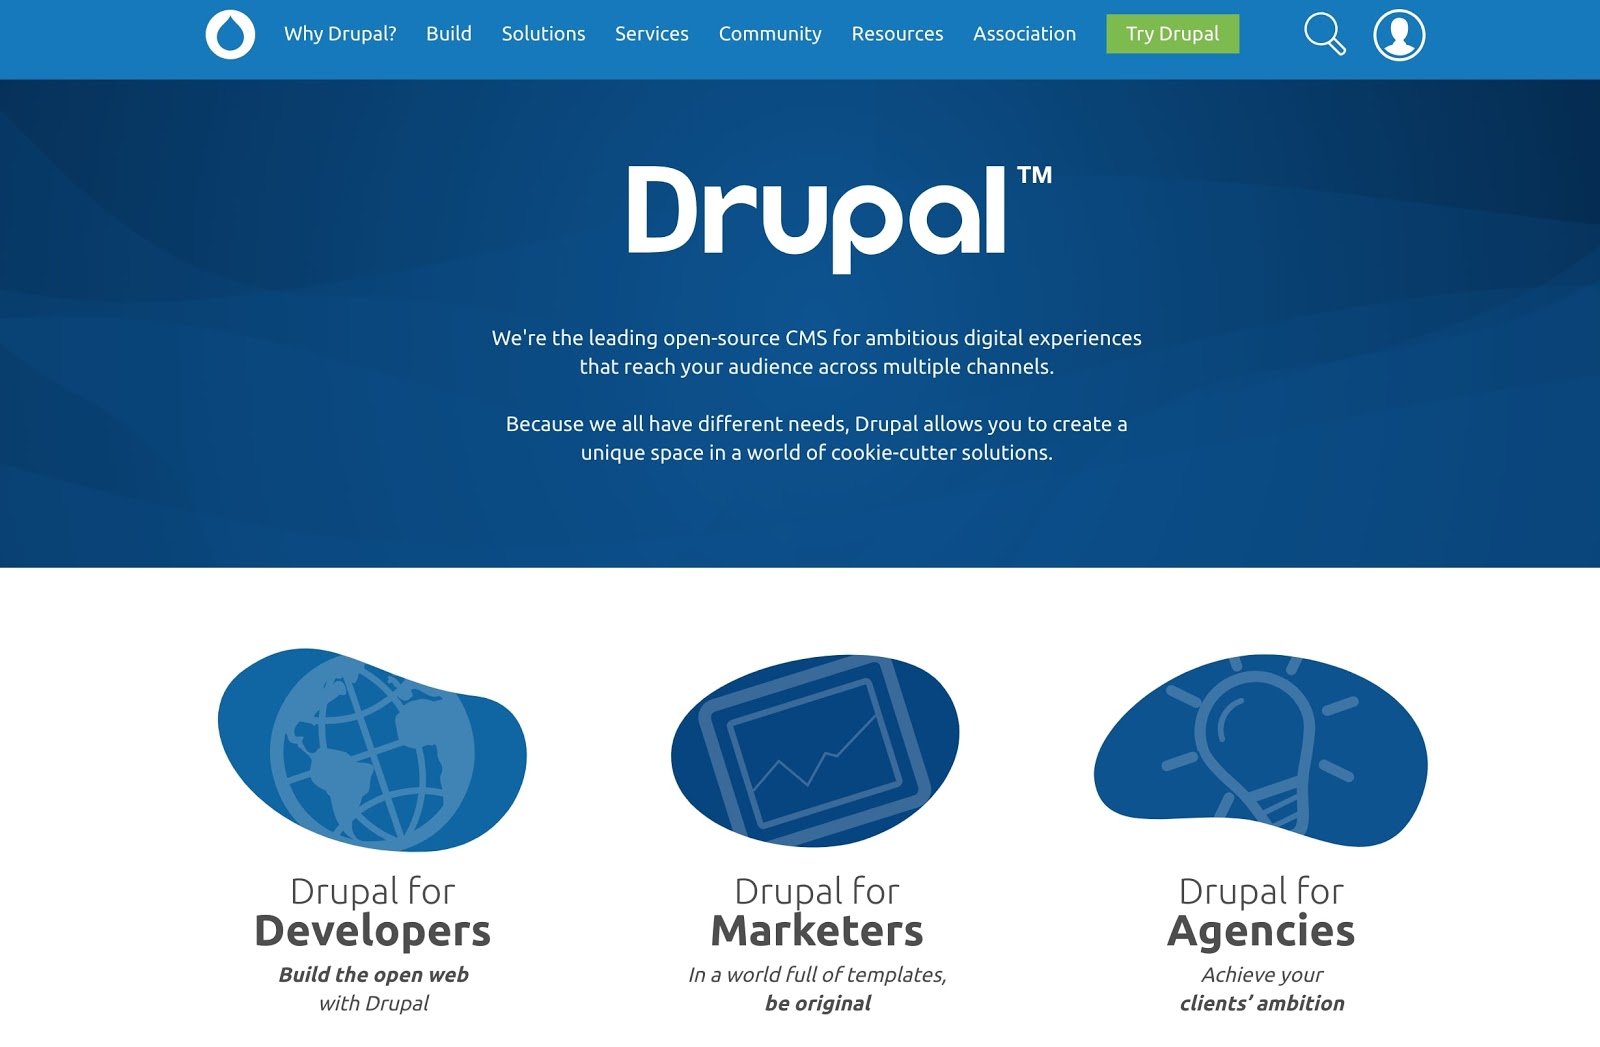 The Drupal homepage